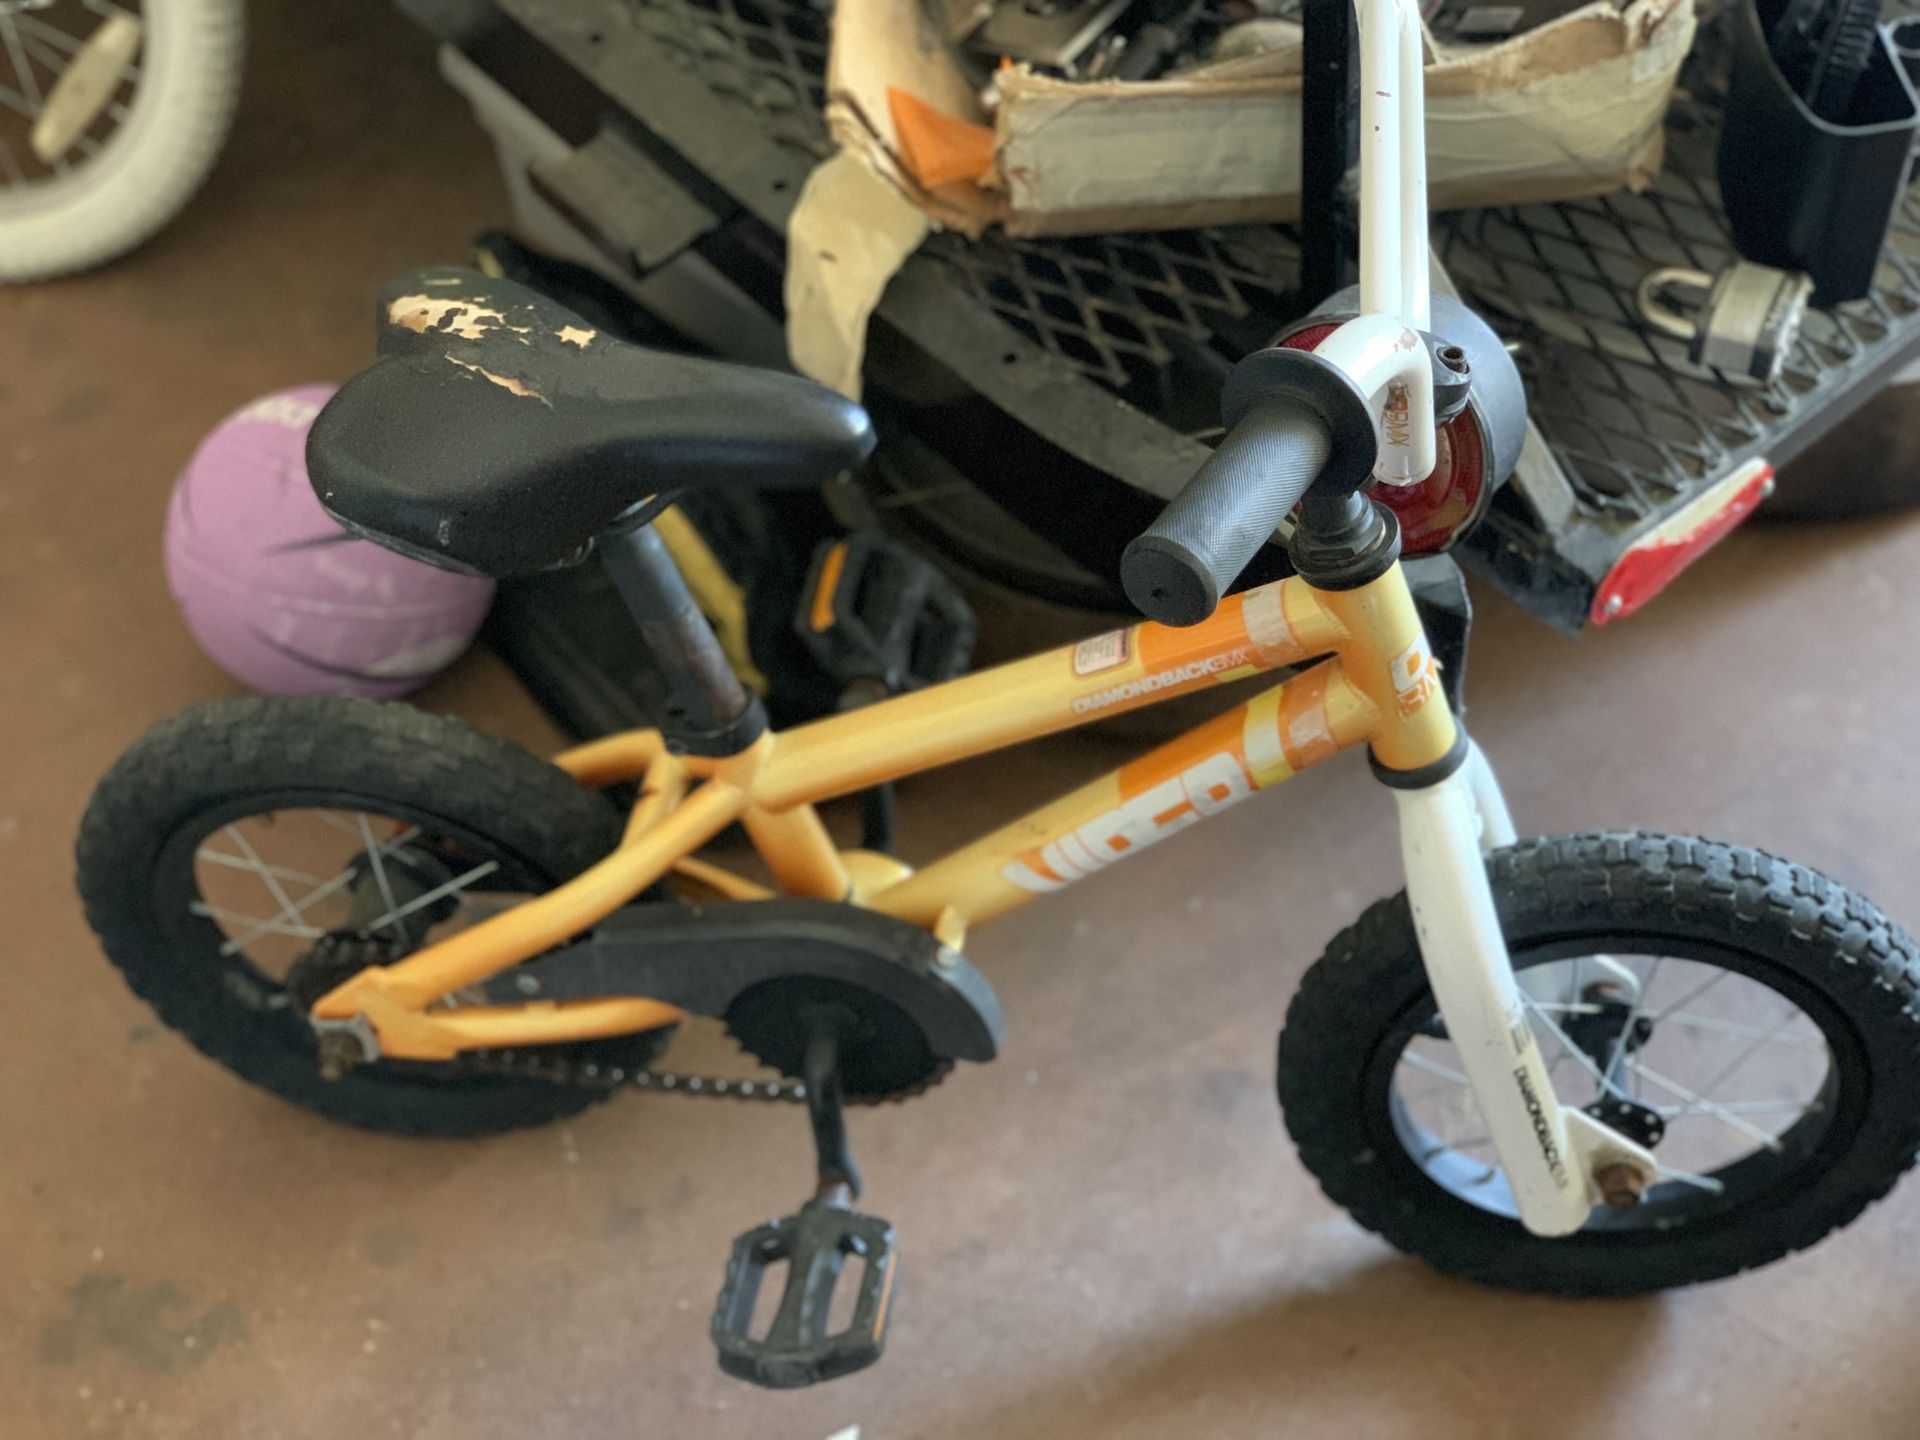 Small orange bike w/training wheels